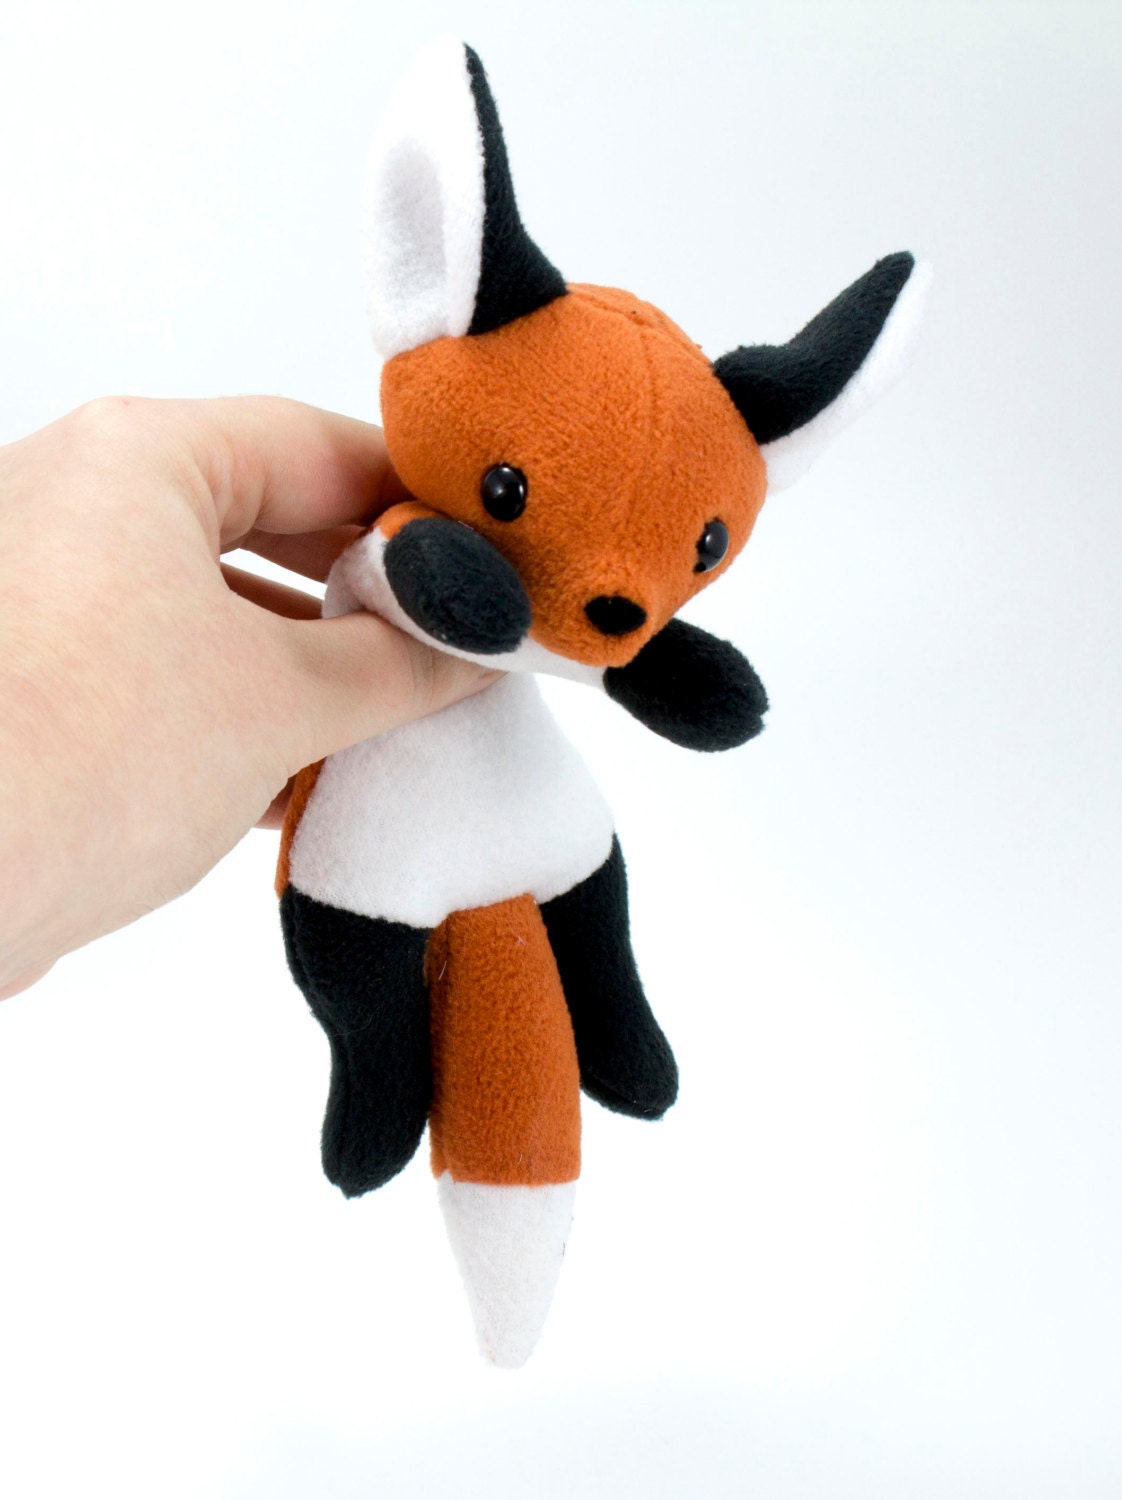 Beanie Fox Plush Toy Stuffed Animal Plushie By BeeZeeArt On Etsy.